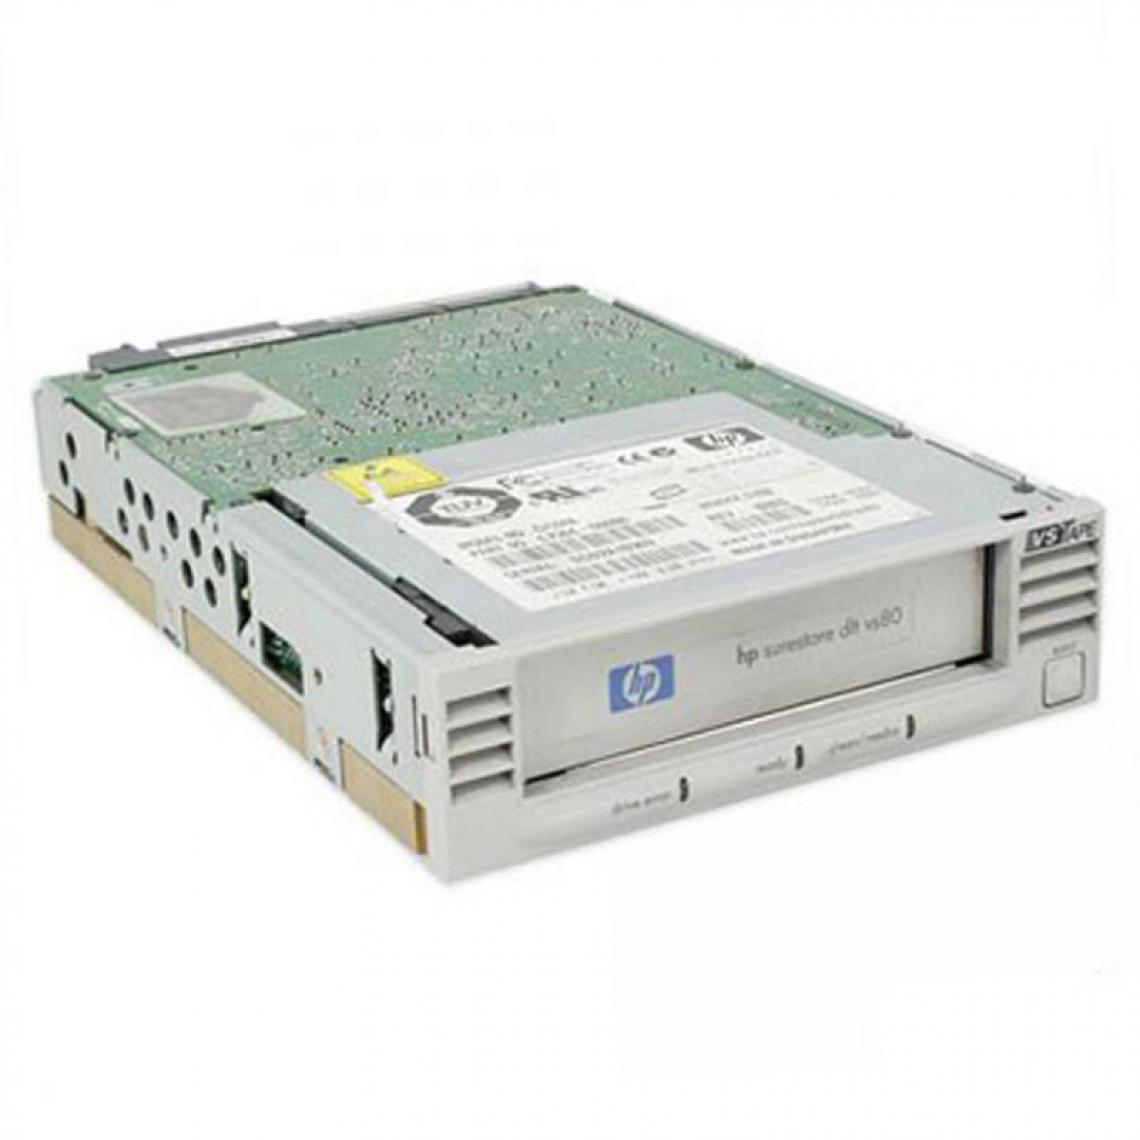 Hp - Lecteur Bande DLT SCSI HP SureStore DLT-VS80 C7504A C7504-60003 C7504-69201 - Lecteur Blu-ray